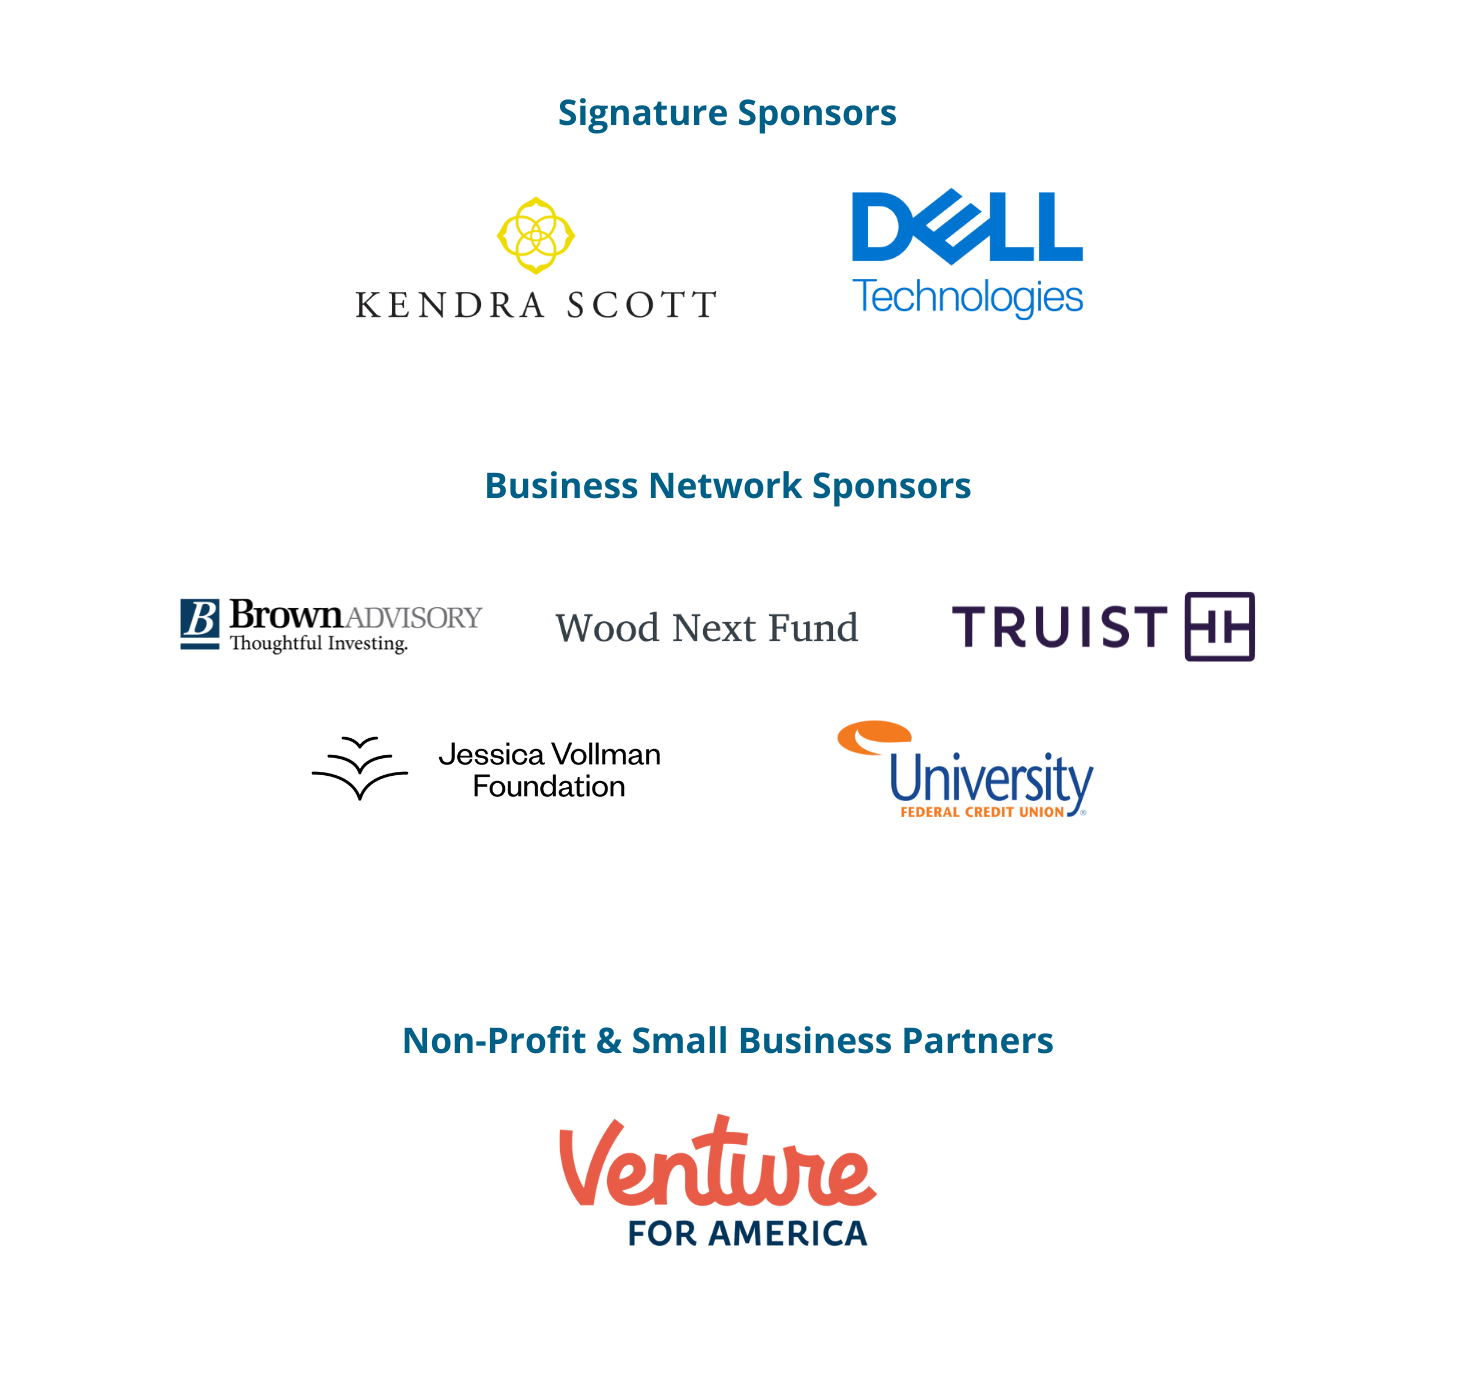 KS WELI Signature Sponsors, Business Network Sponsors, and Non-Profit and Small Business Sponsors